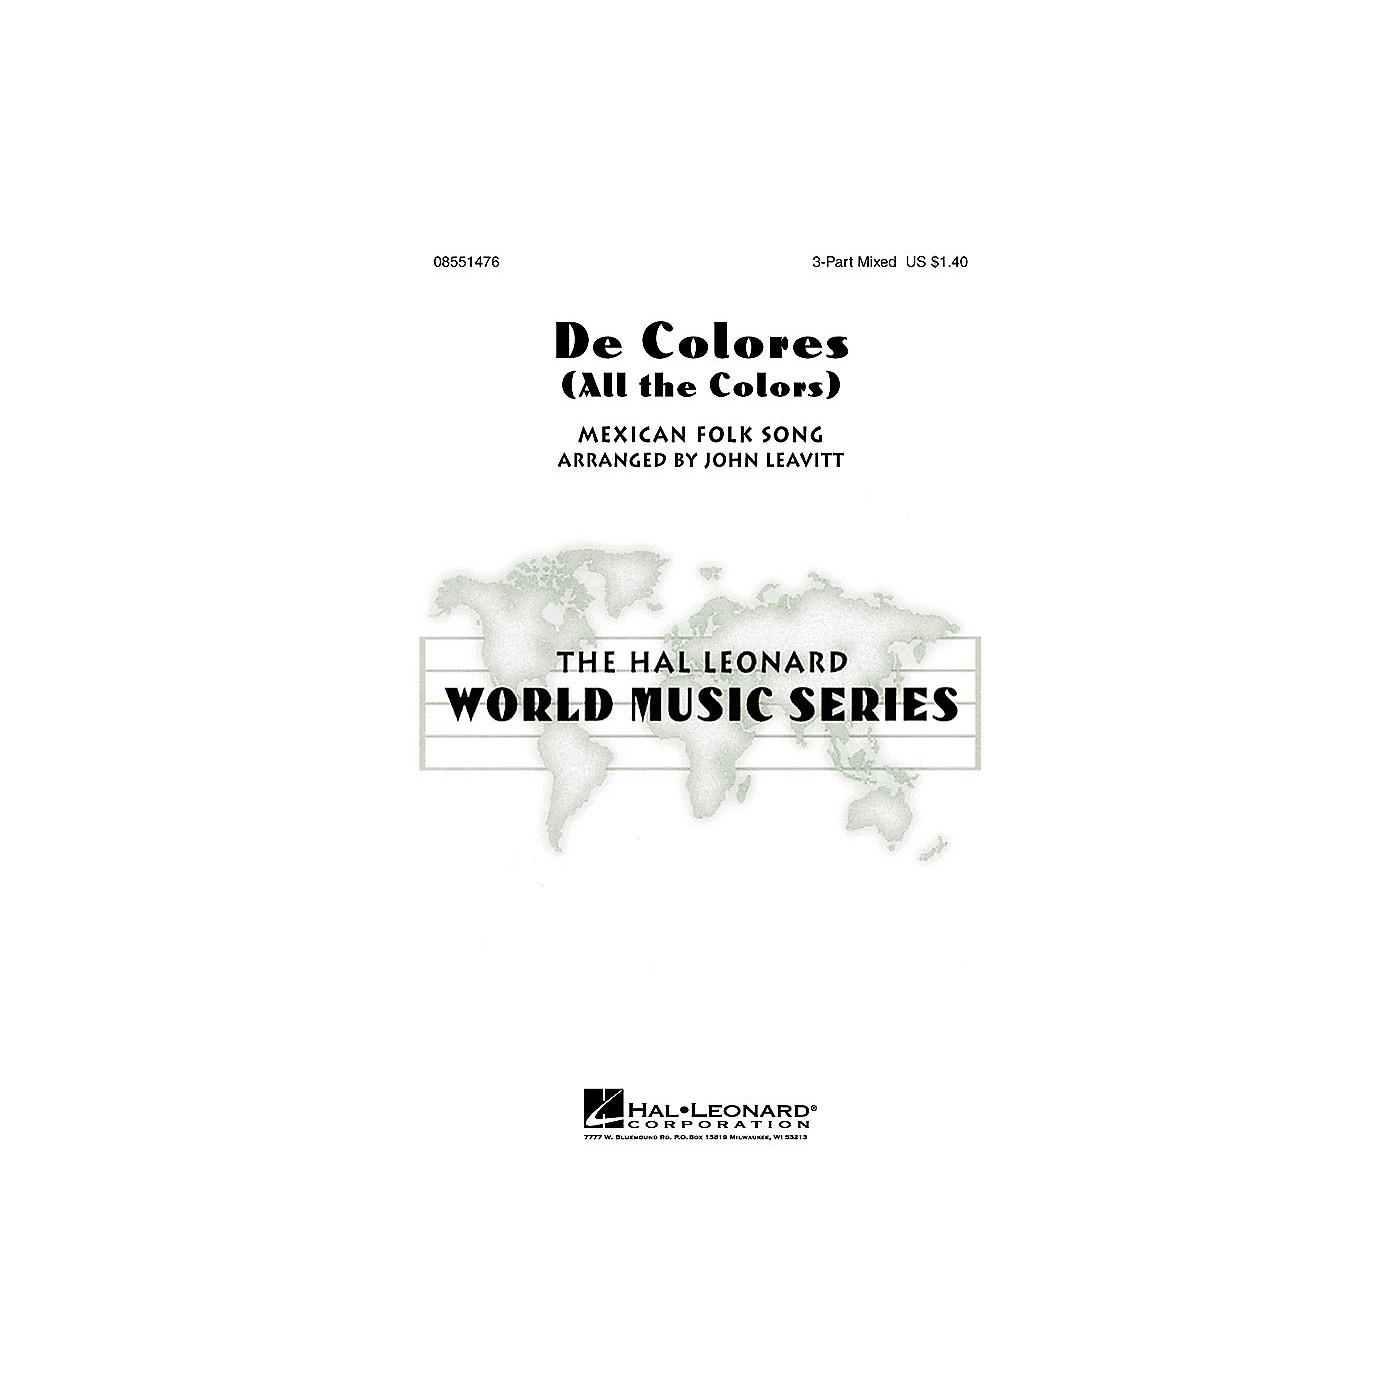 Hal Leonard De Colores (All the Colors) 3-Part Mixed arranged by John Leavitt thumbnail